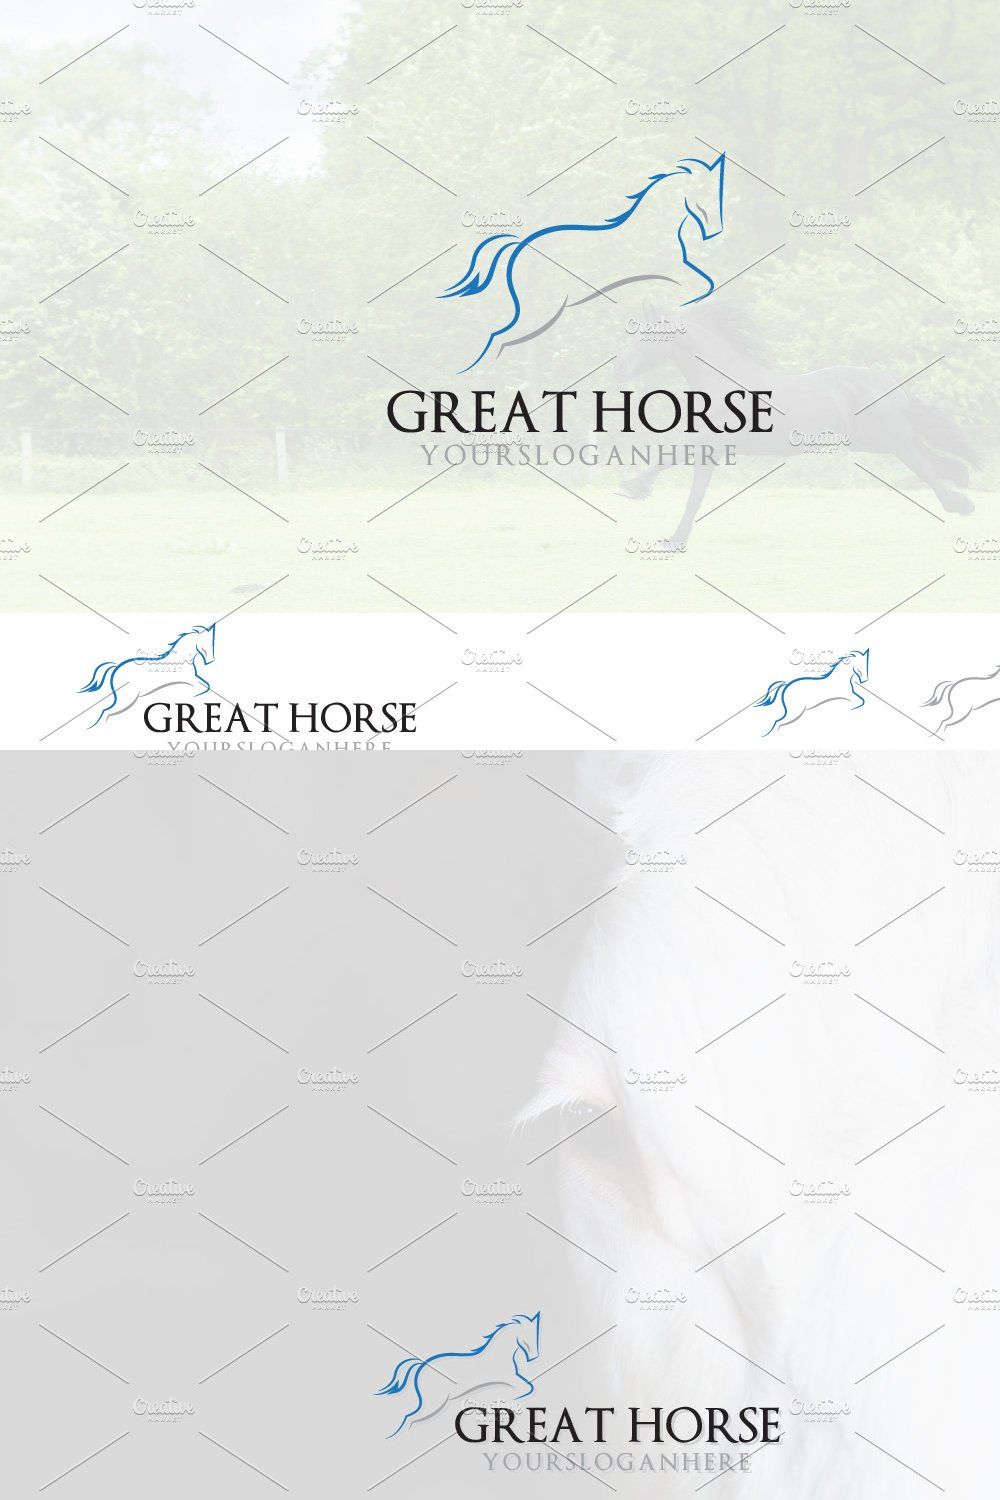 Prancing Horse Running Jumping Logo pinterest preview image.